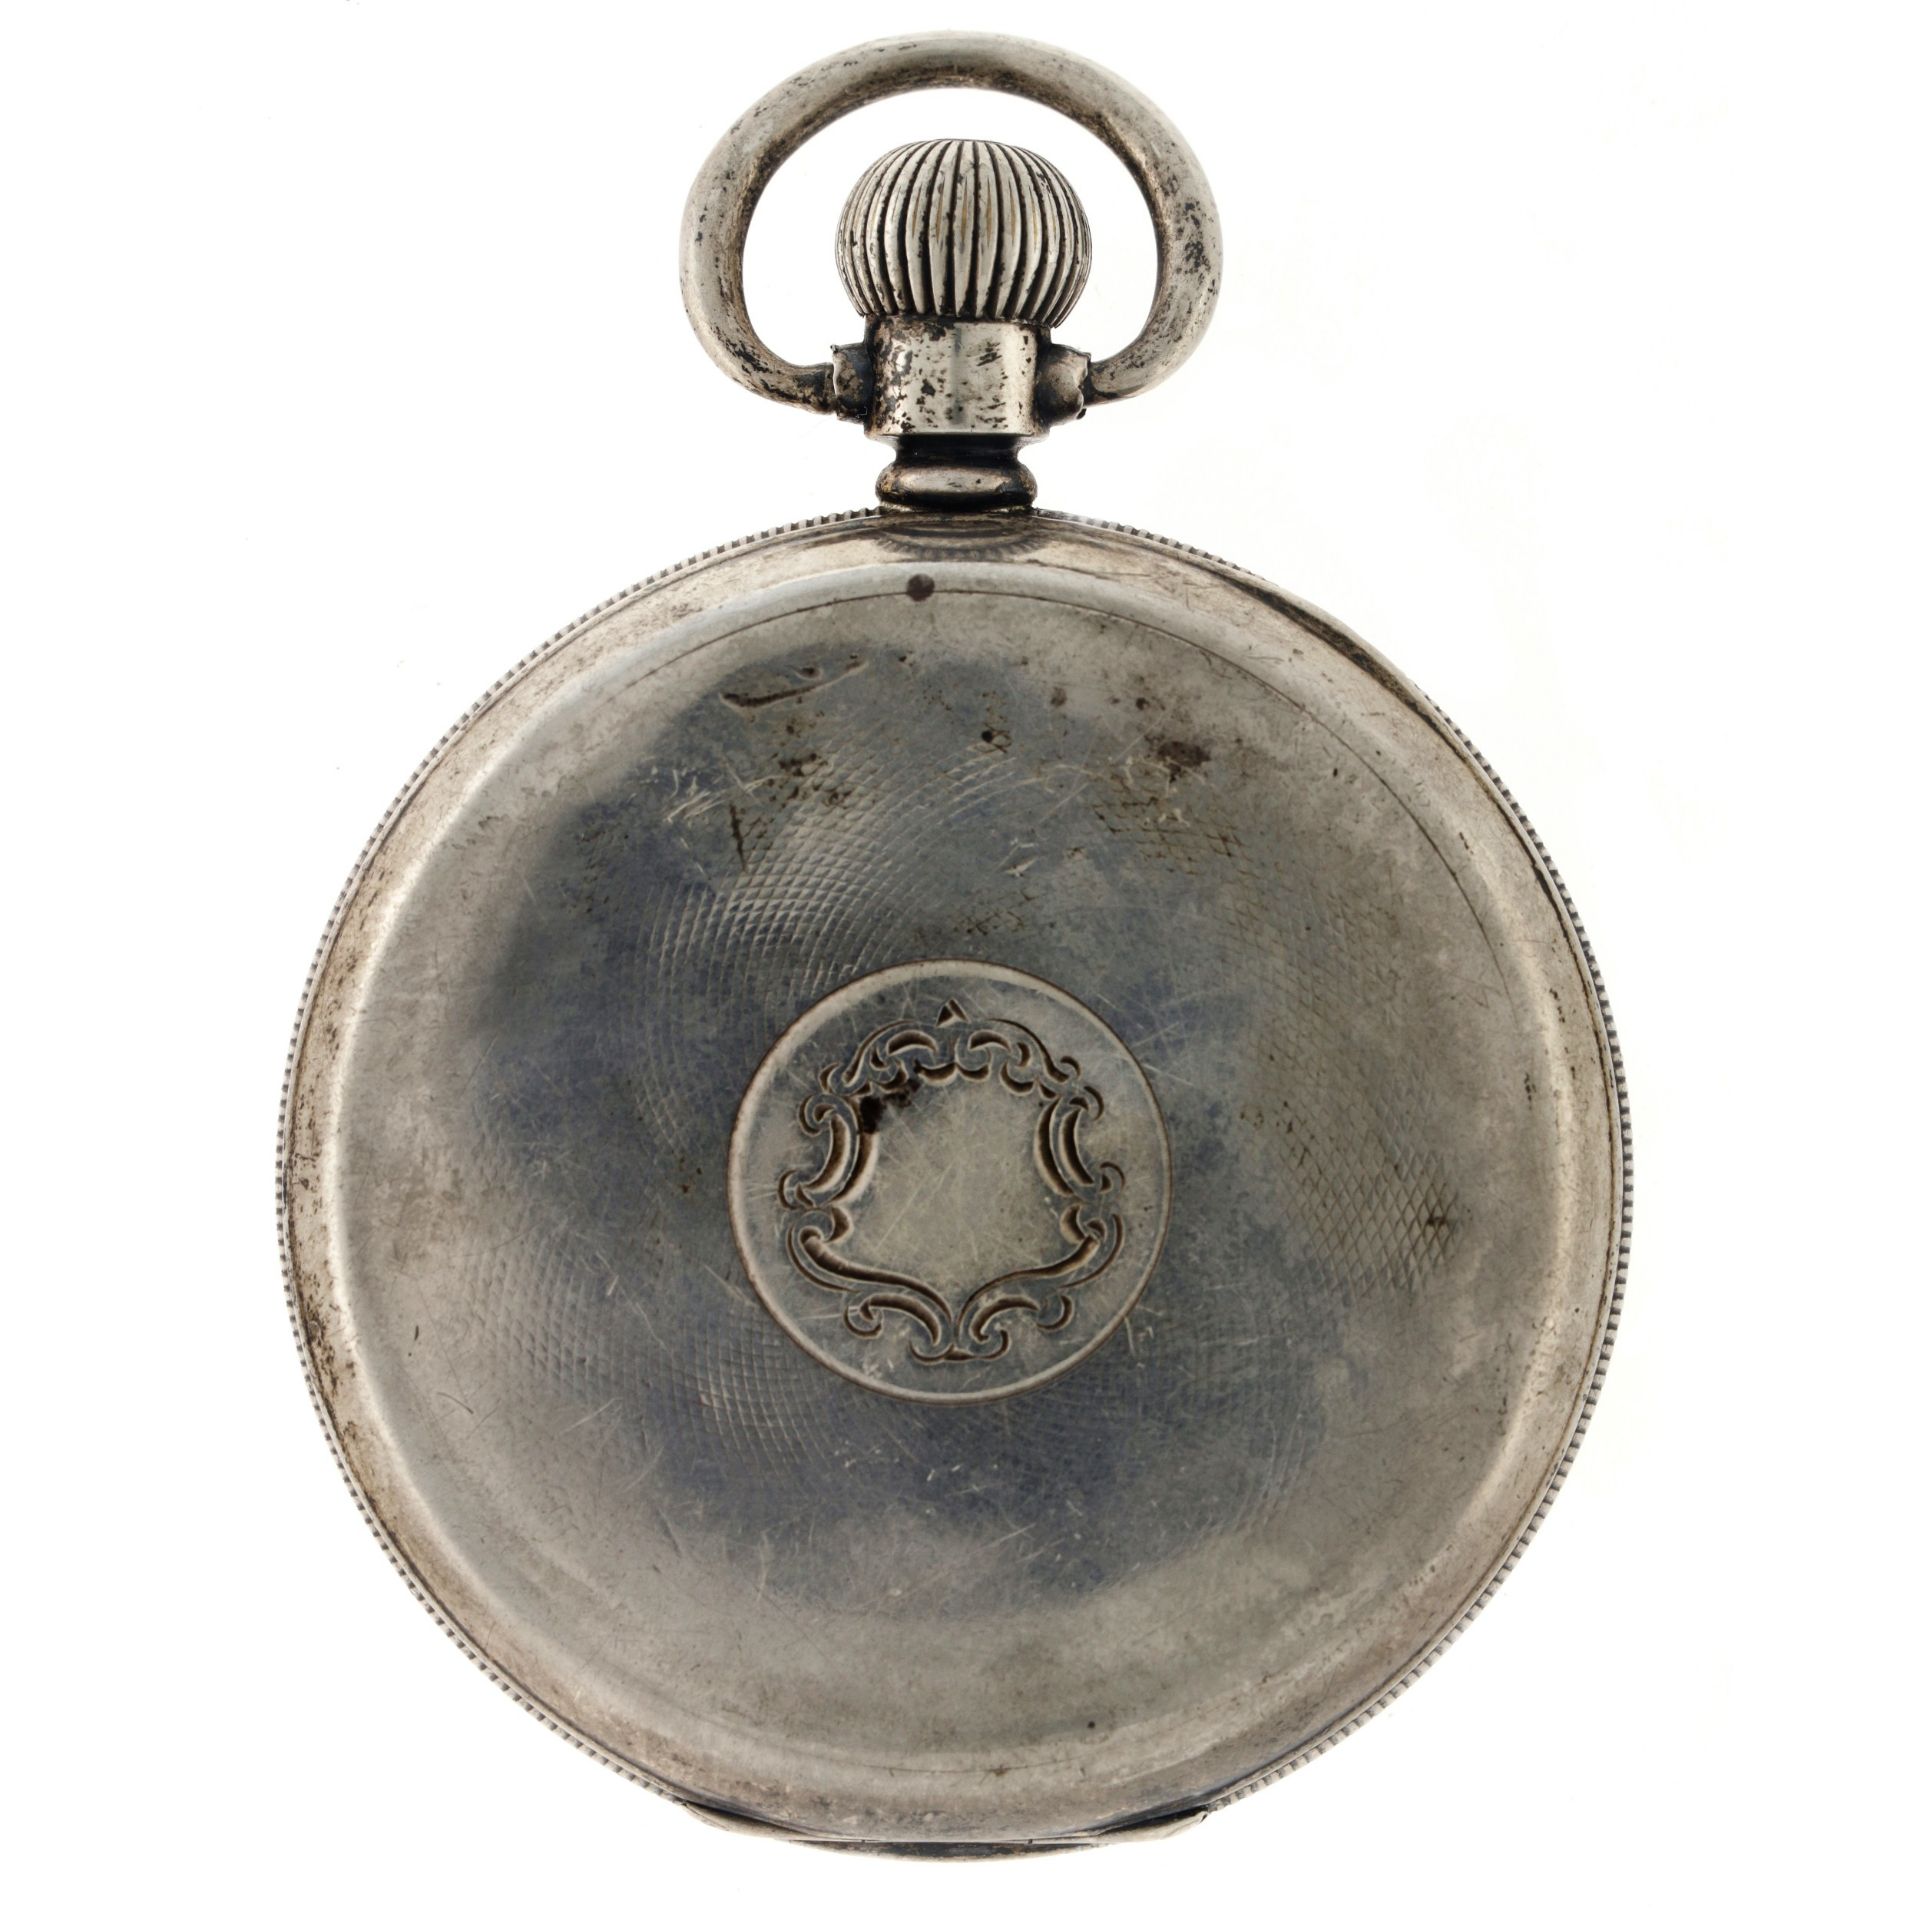 No Reserve - Waltham U.S.A. silver pocketwatch (925/1000) - Men's pocketwatch - approx. 1918. - Bild 2 aus 7